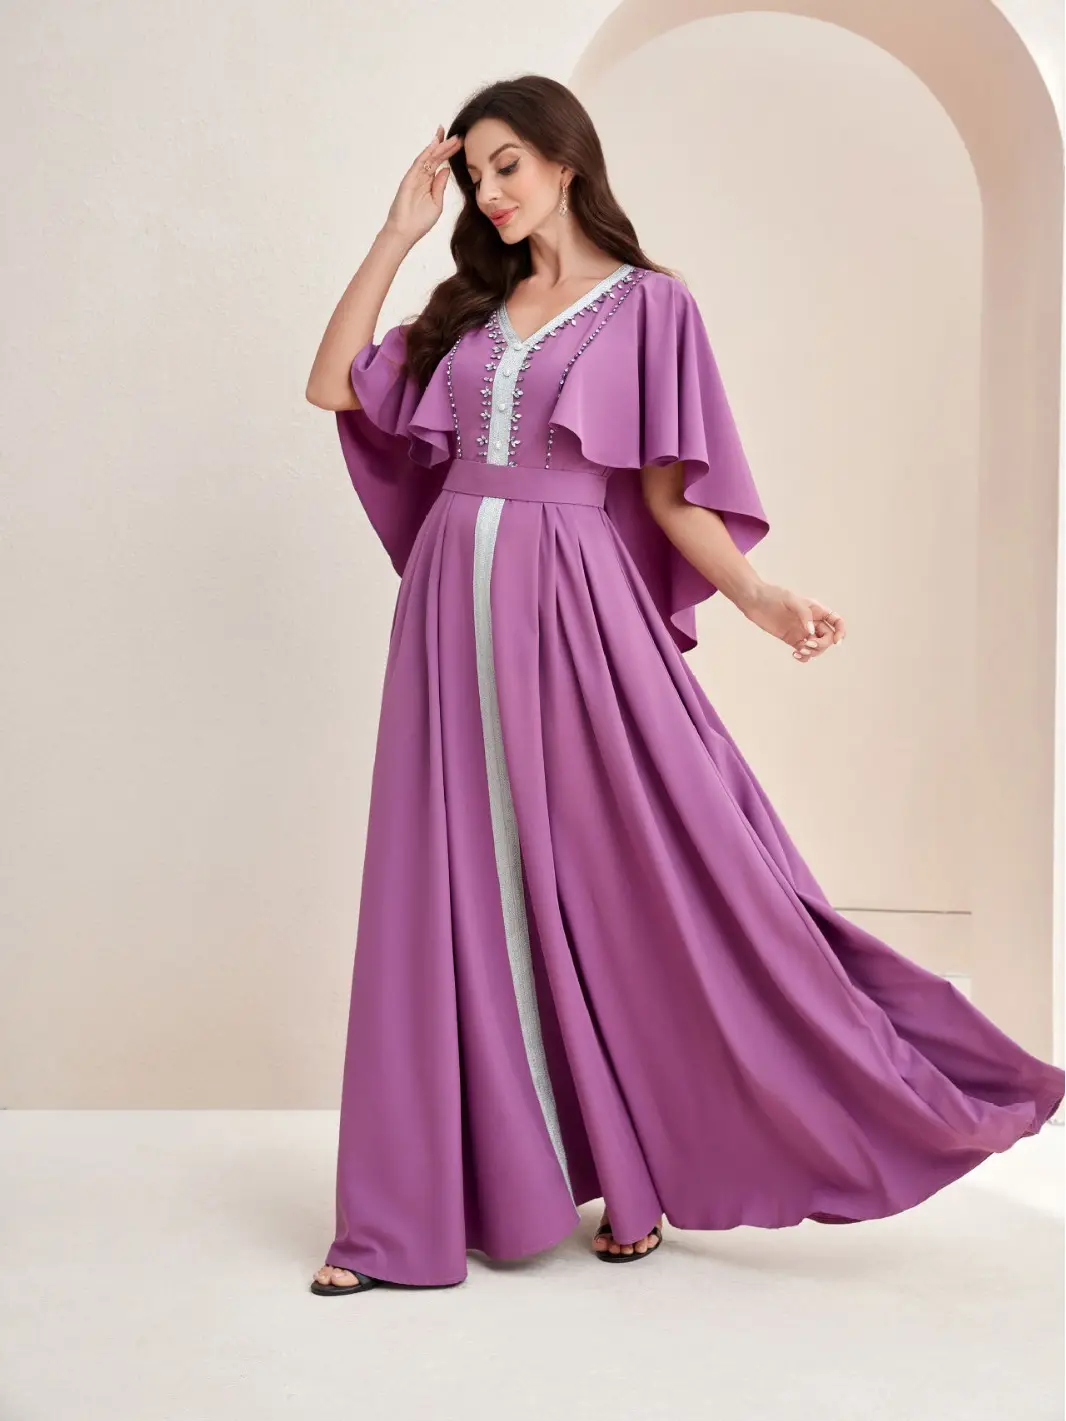 Gaun maxi manik-manik desain baru gaun muslim wanita wanita elegan ungu Turki burkha abaya untuk Gadis muslim